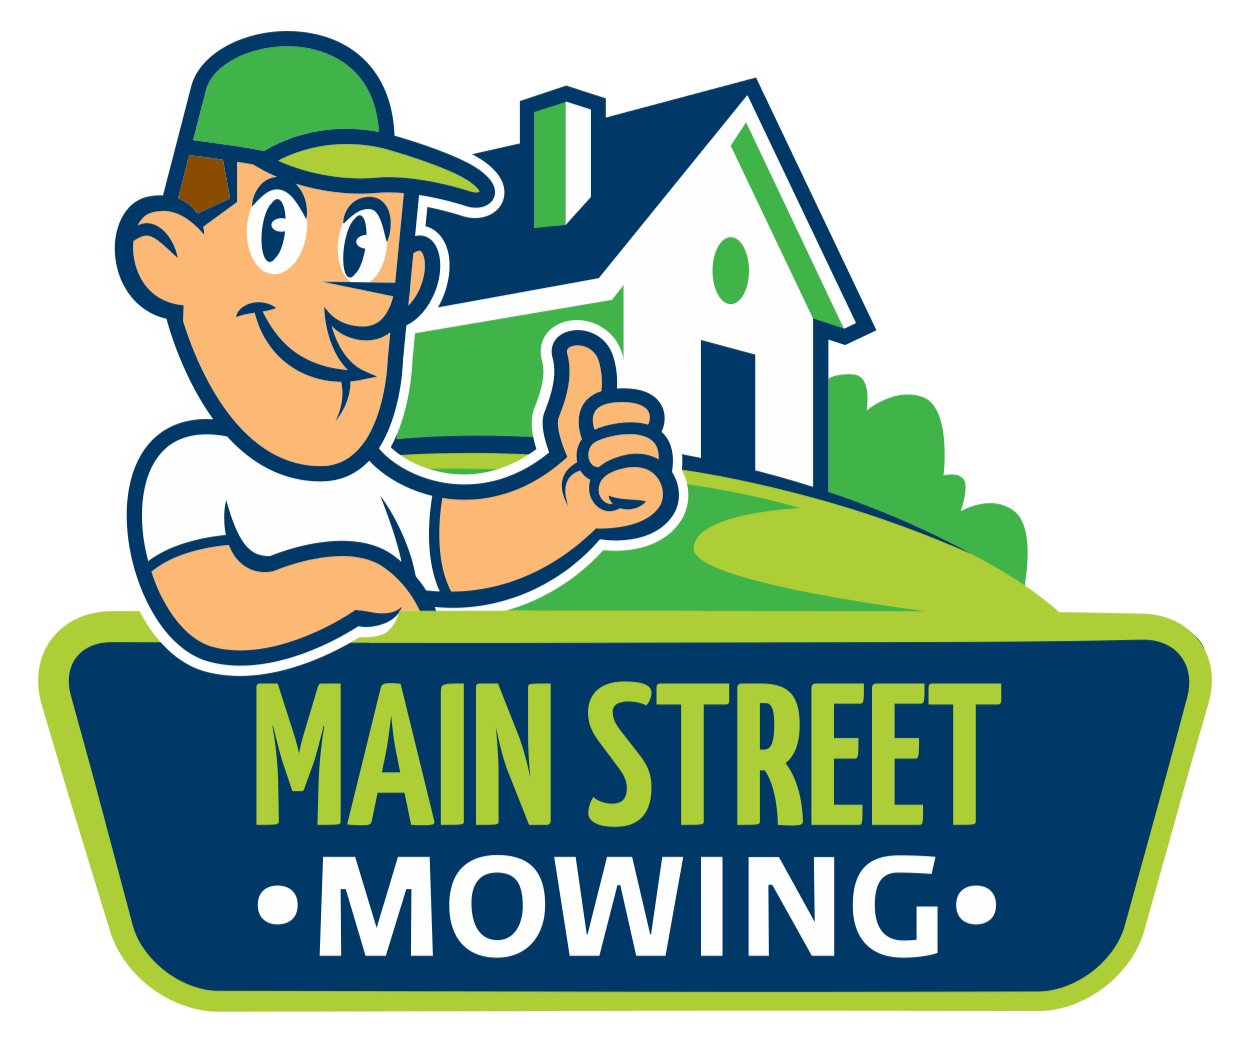 Main Street Mowing